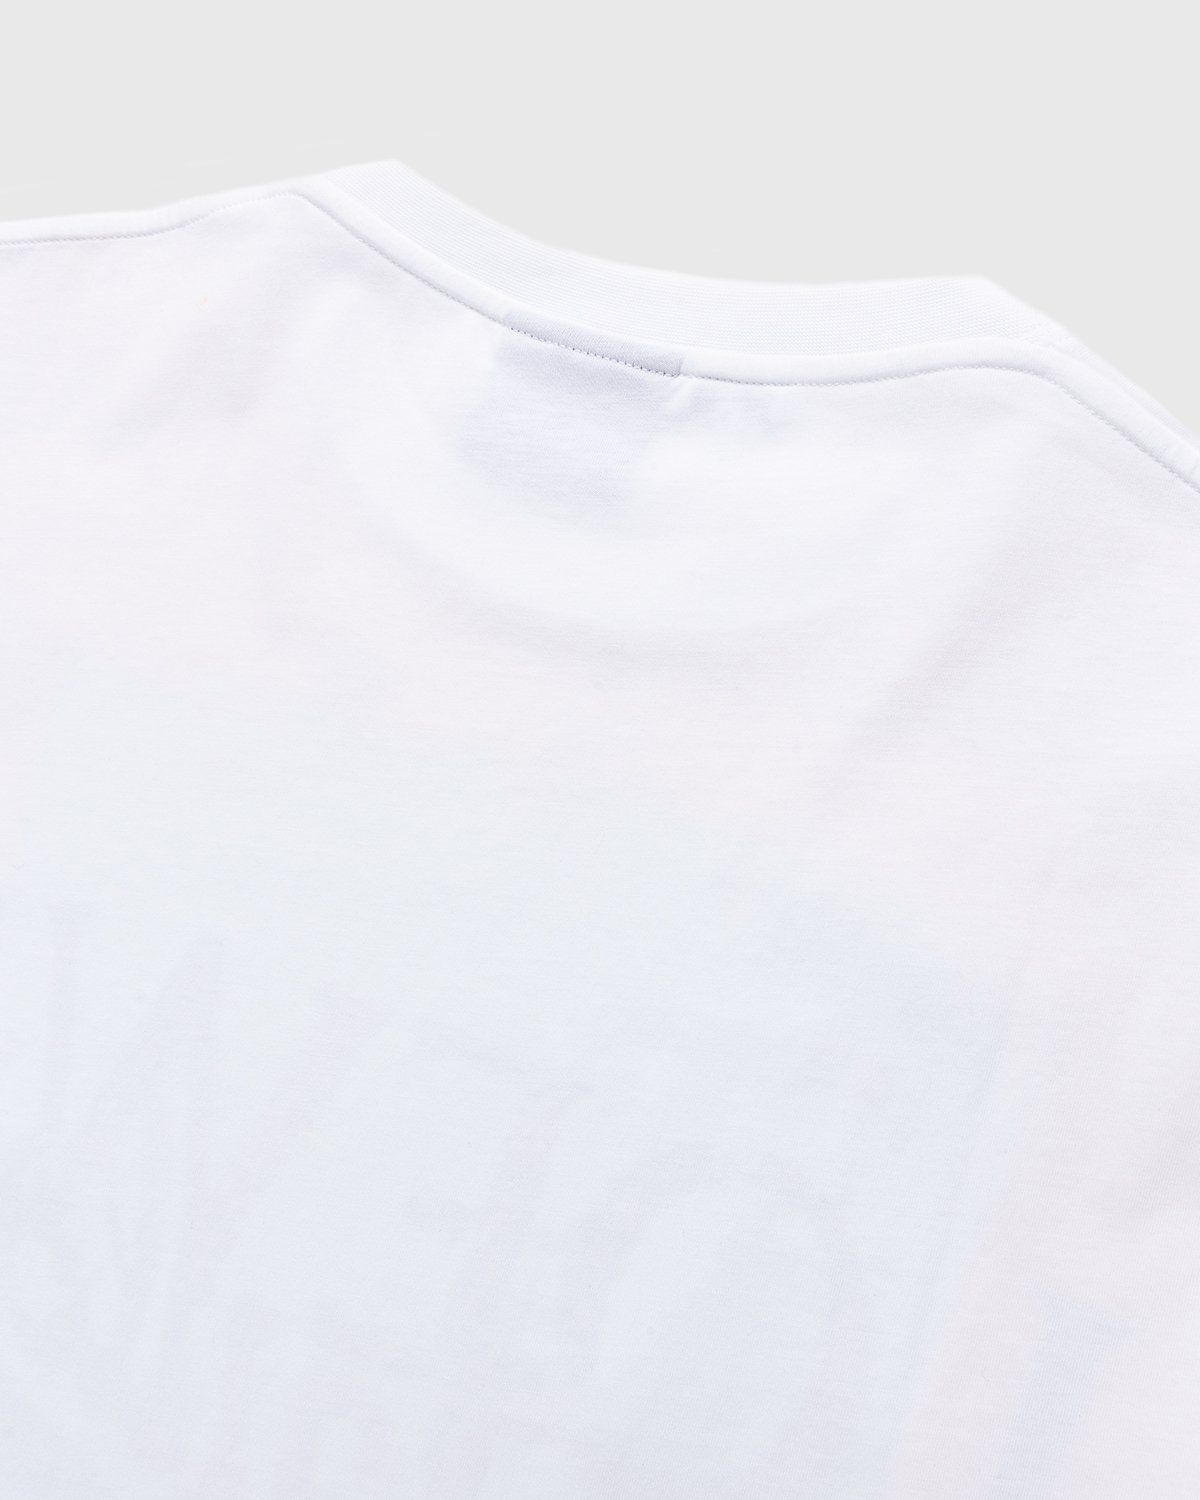 Loewe – Paula's Ibiza Palm Print T-Shirt White/Multi - T-Shirts - Multi - Image 5